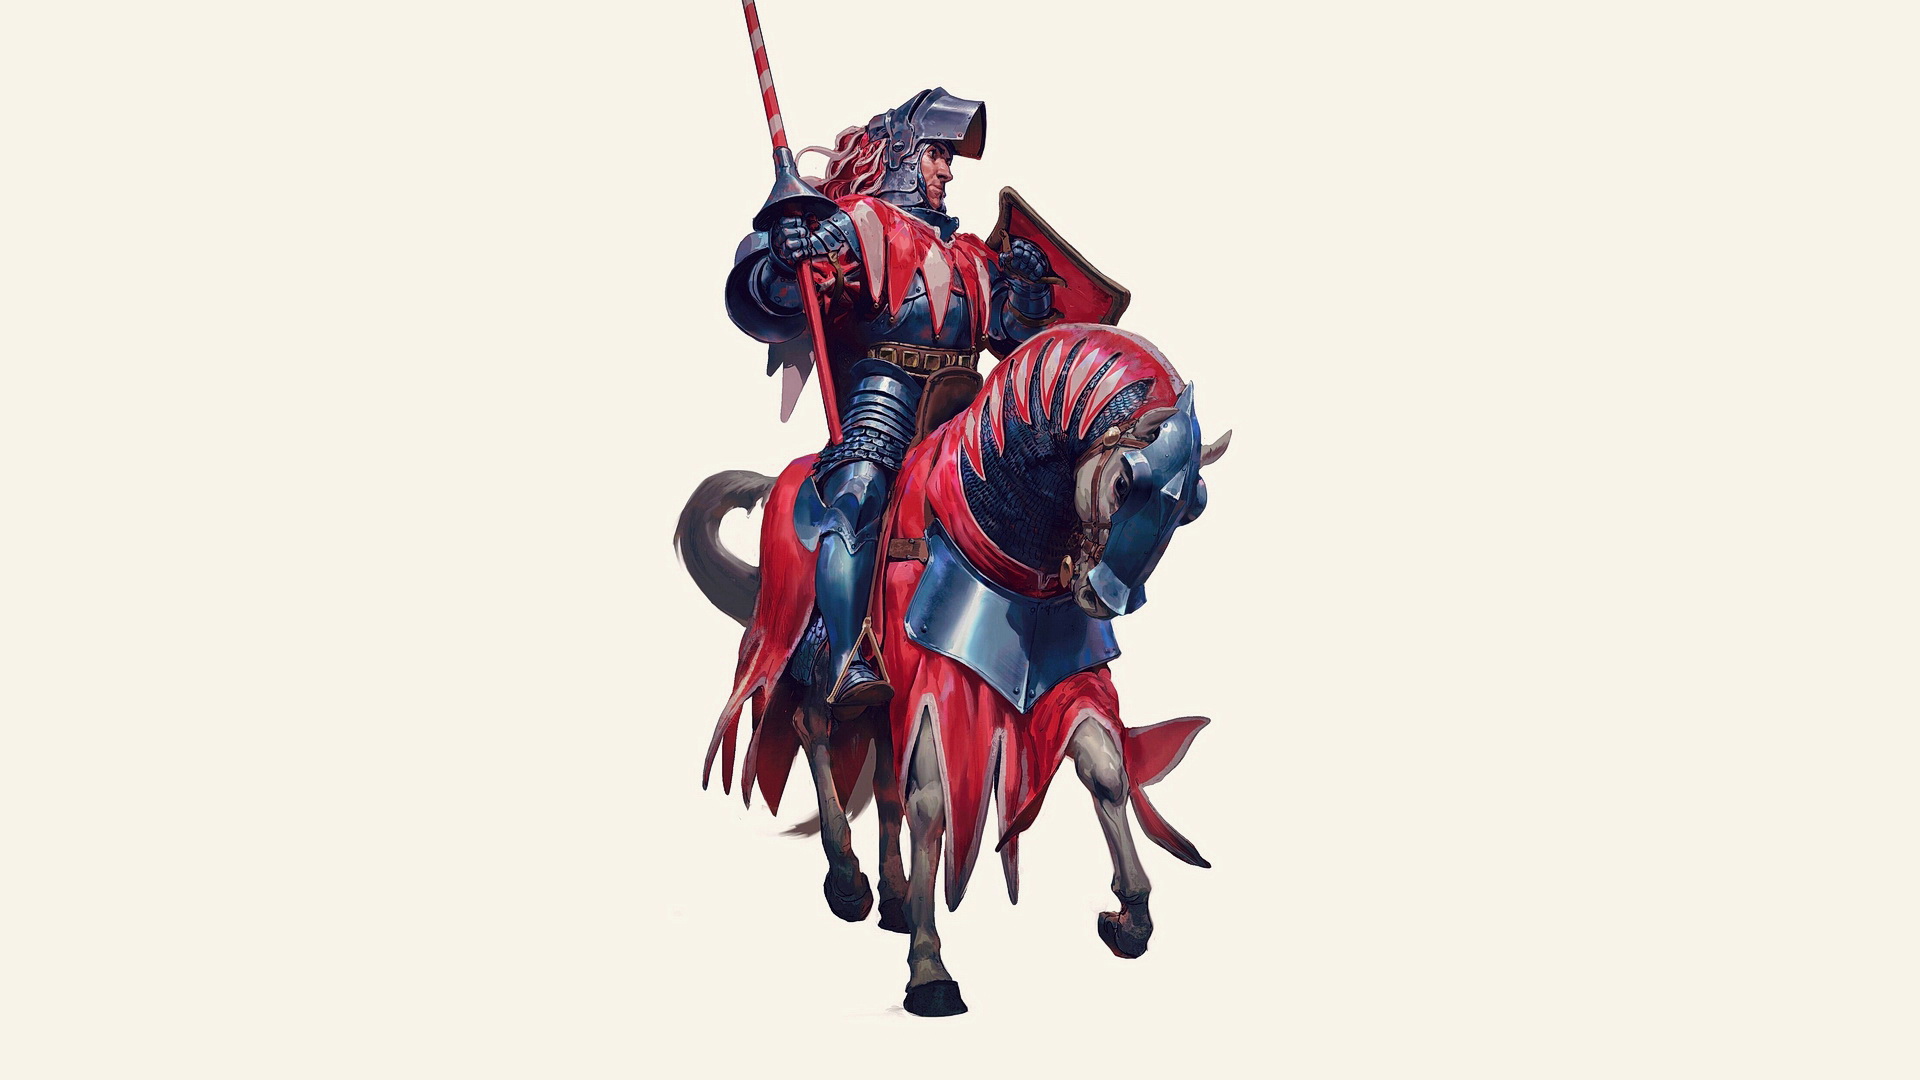 Бесплатное фото Рыцарь на коне